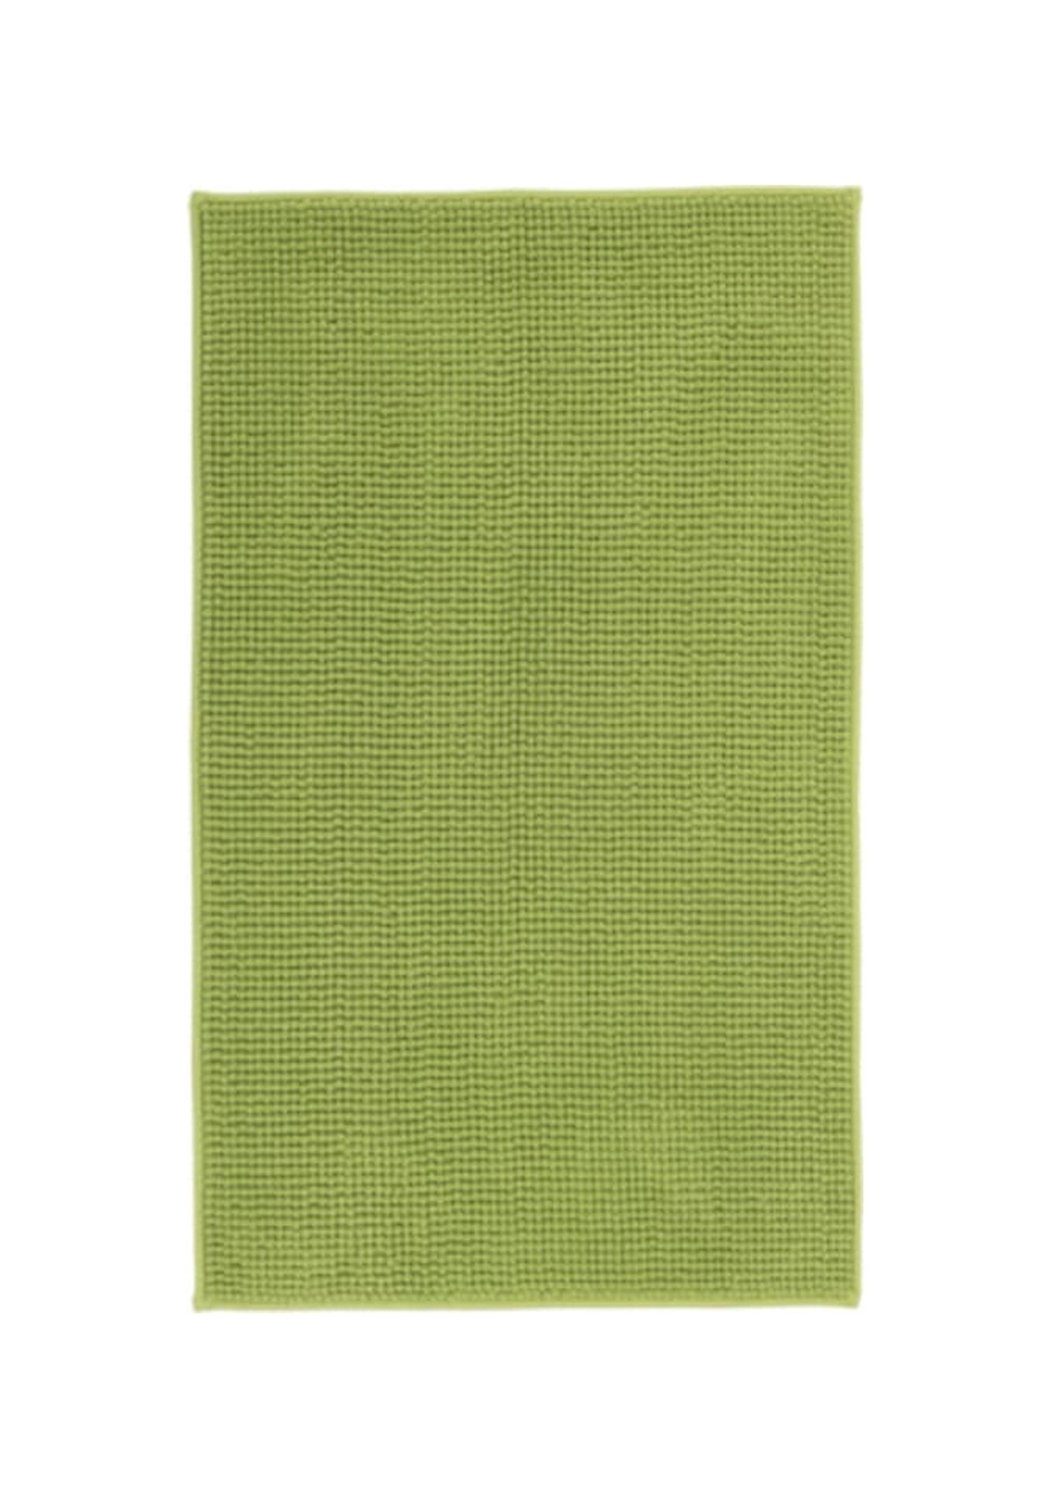 Badematte CHENILLE, Apfelgrün, 70 x 50 cm, Uni, Höhe 15.0 mm, rutschhemmend beschichtet, fußbodenheizungsgeeignet, Polyester, rechteckig